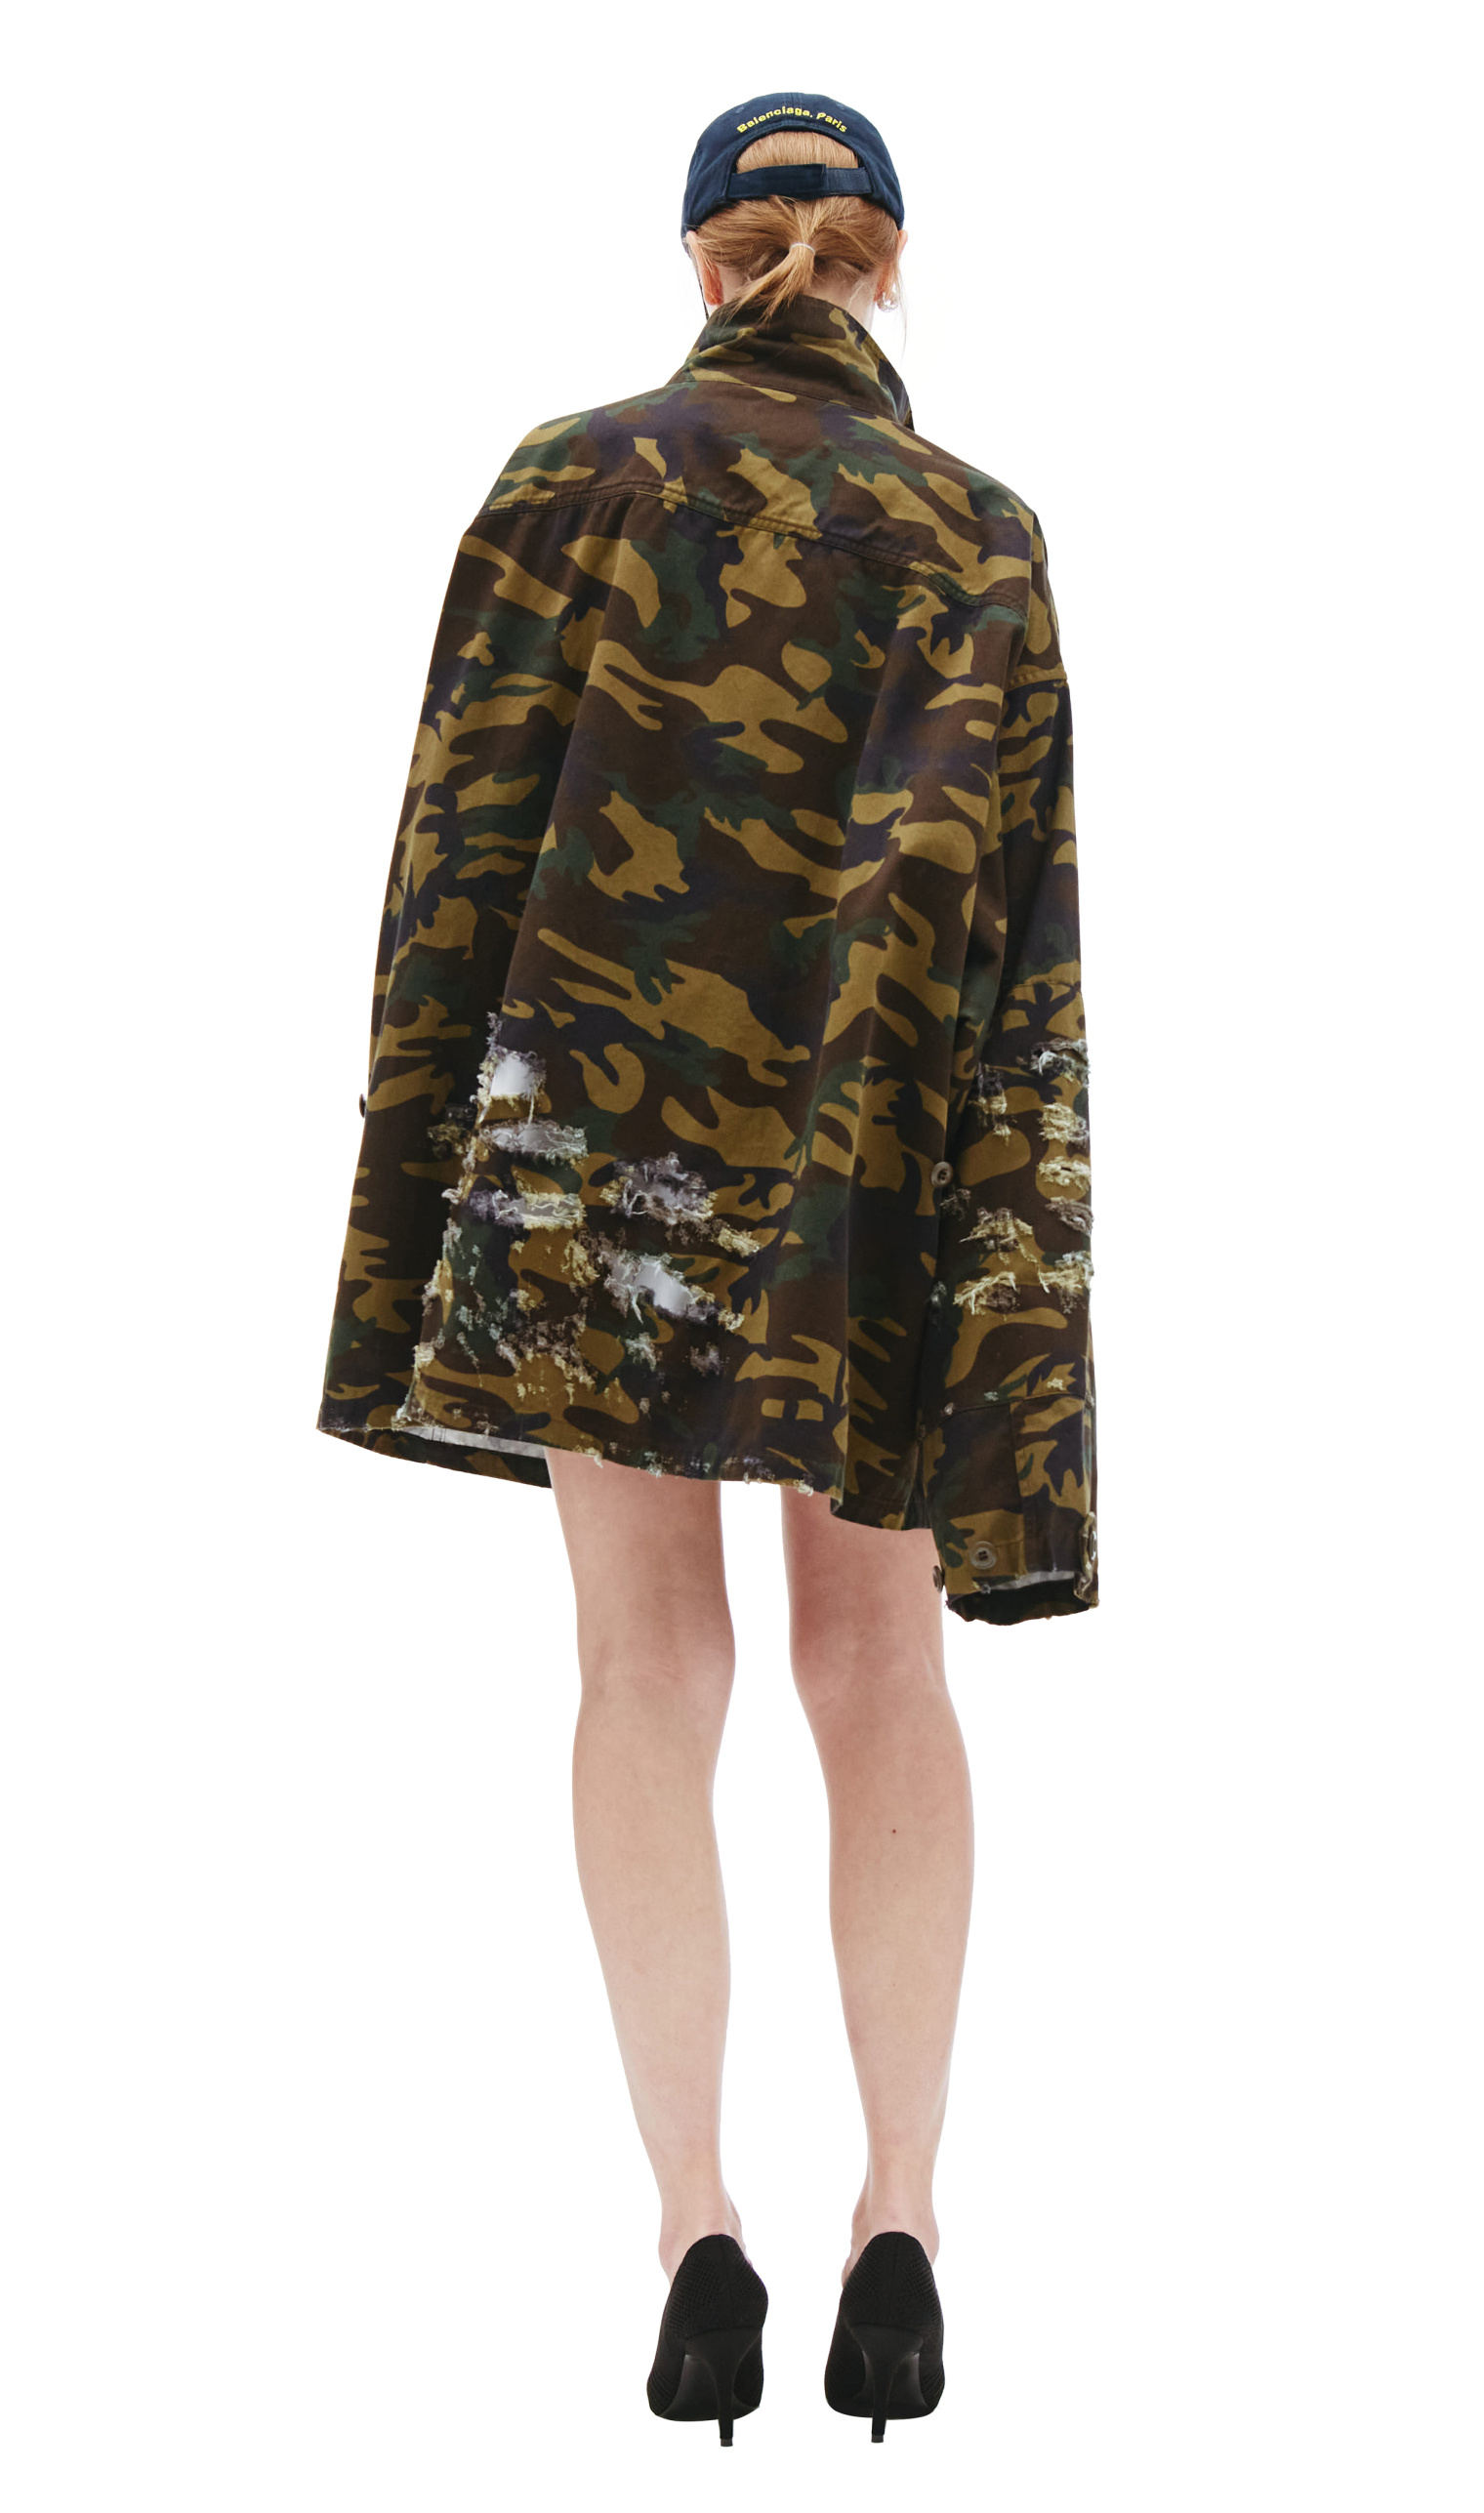 Balenciaga Camouflage Print Army Jacket